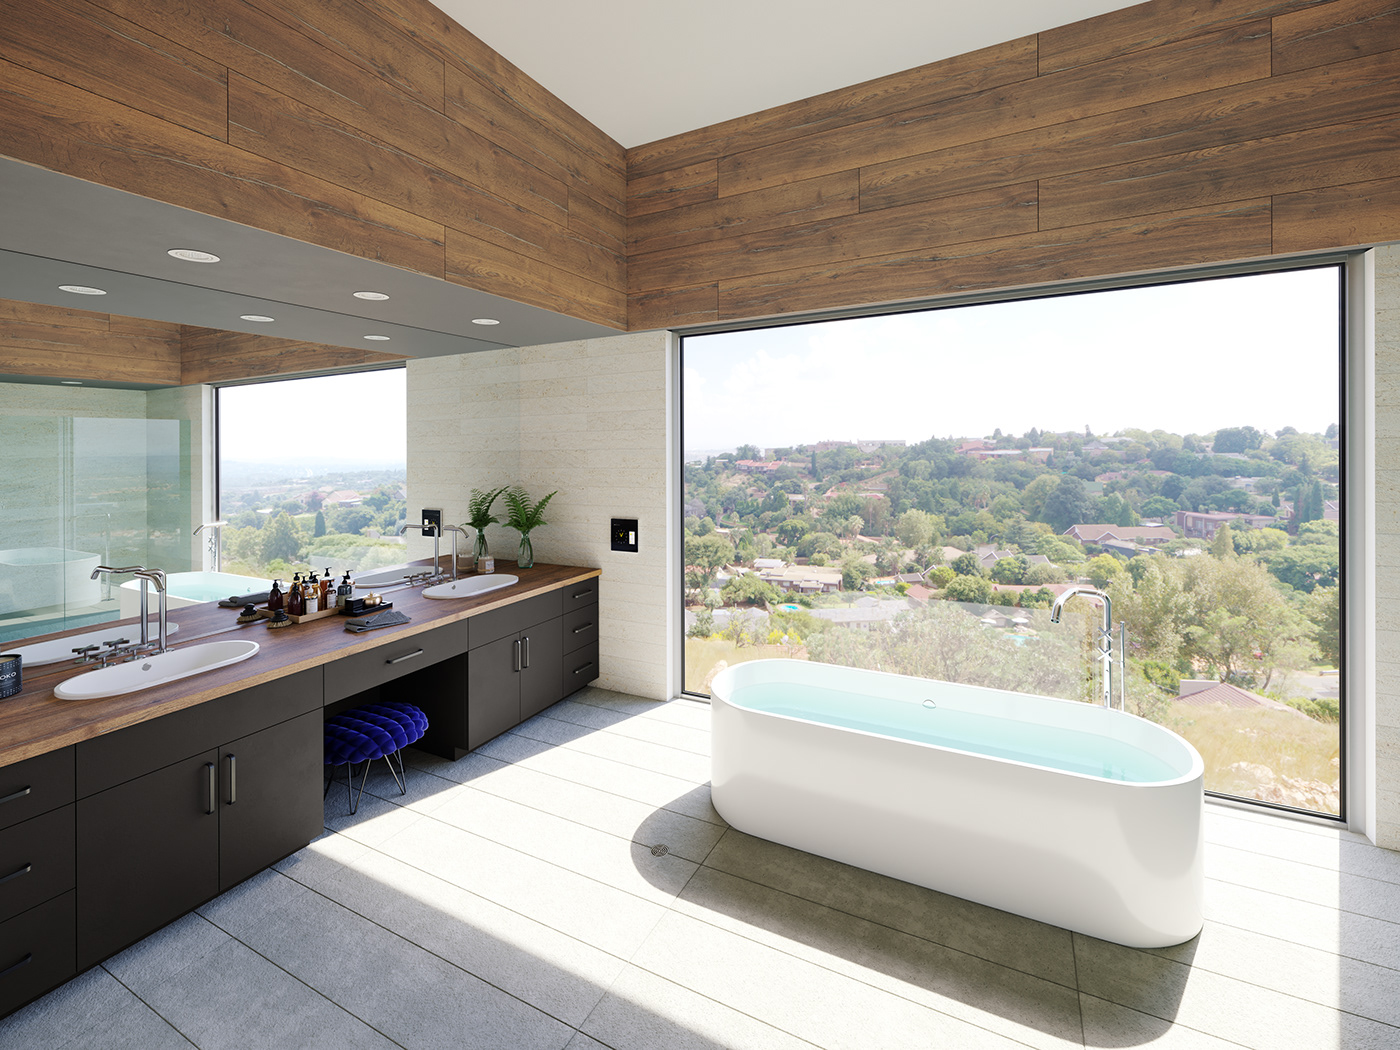 3ds max architecture bathroom design interior design  Render visualization